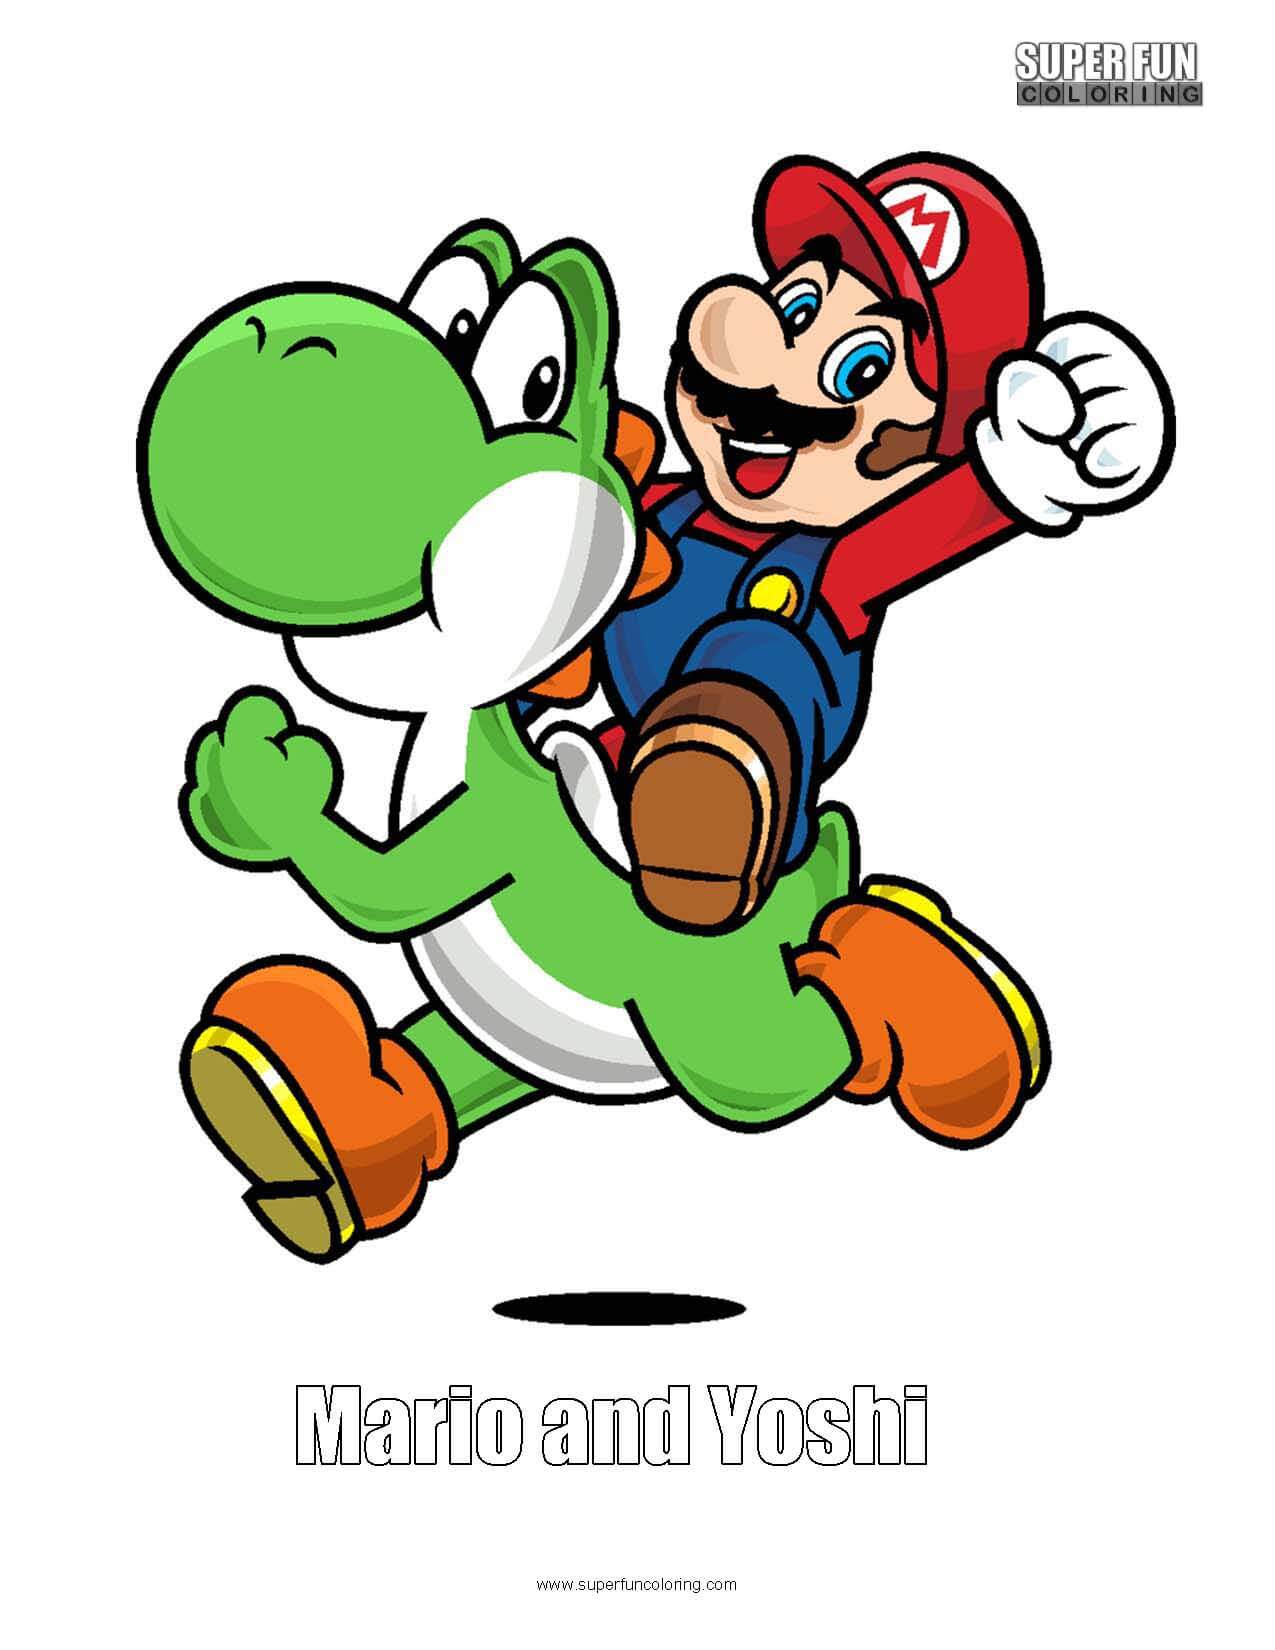 Mario and yoshi coloring page